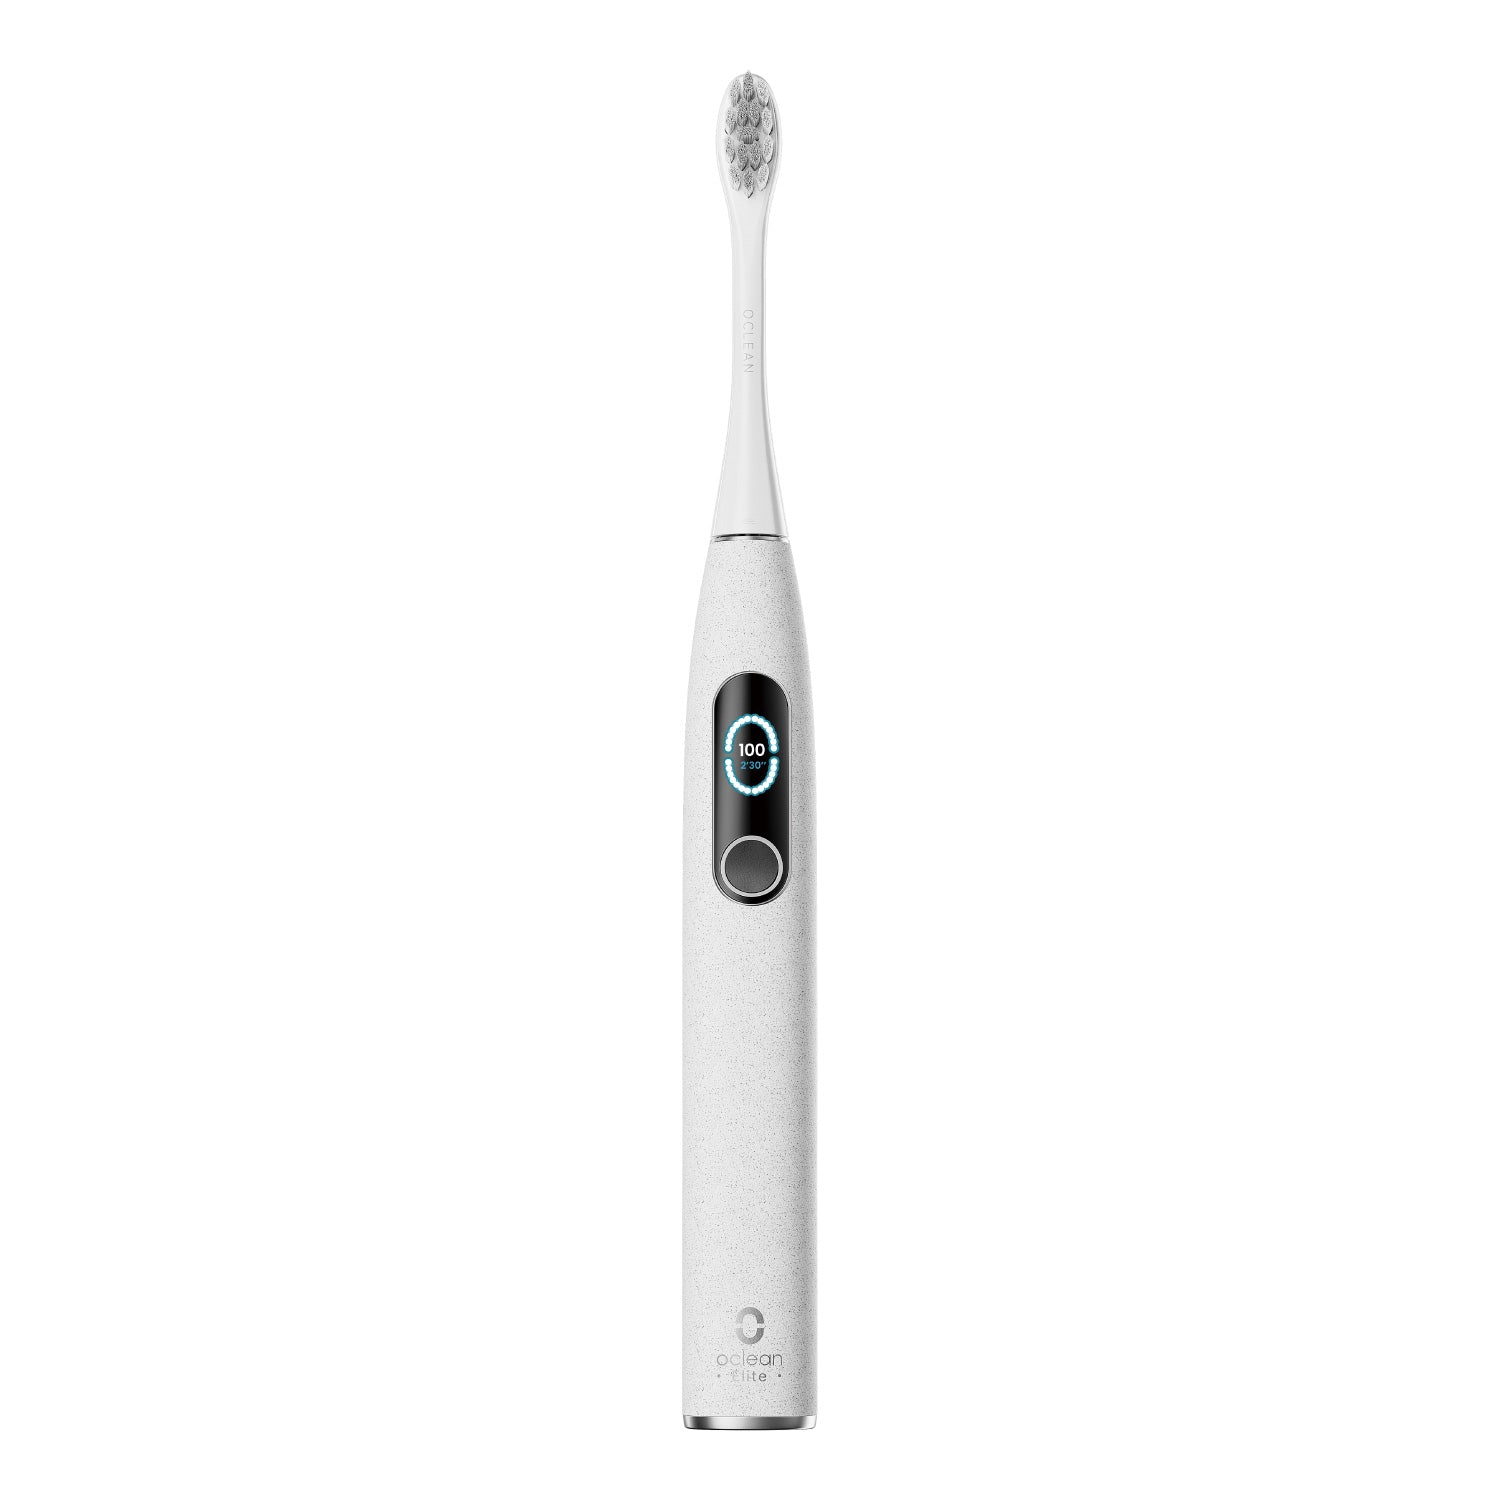 Oclean X Pro Elite Smart Sonic Toothbrush-Toothbrushes-Oclean US Store